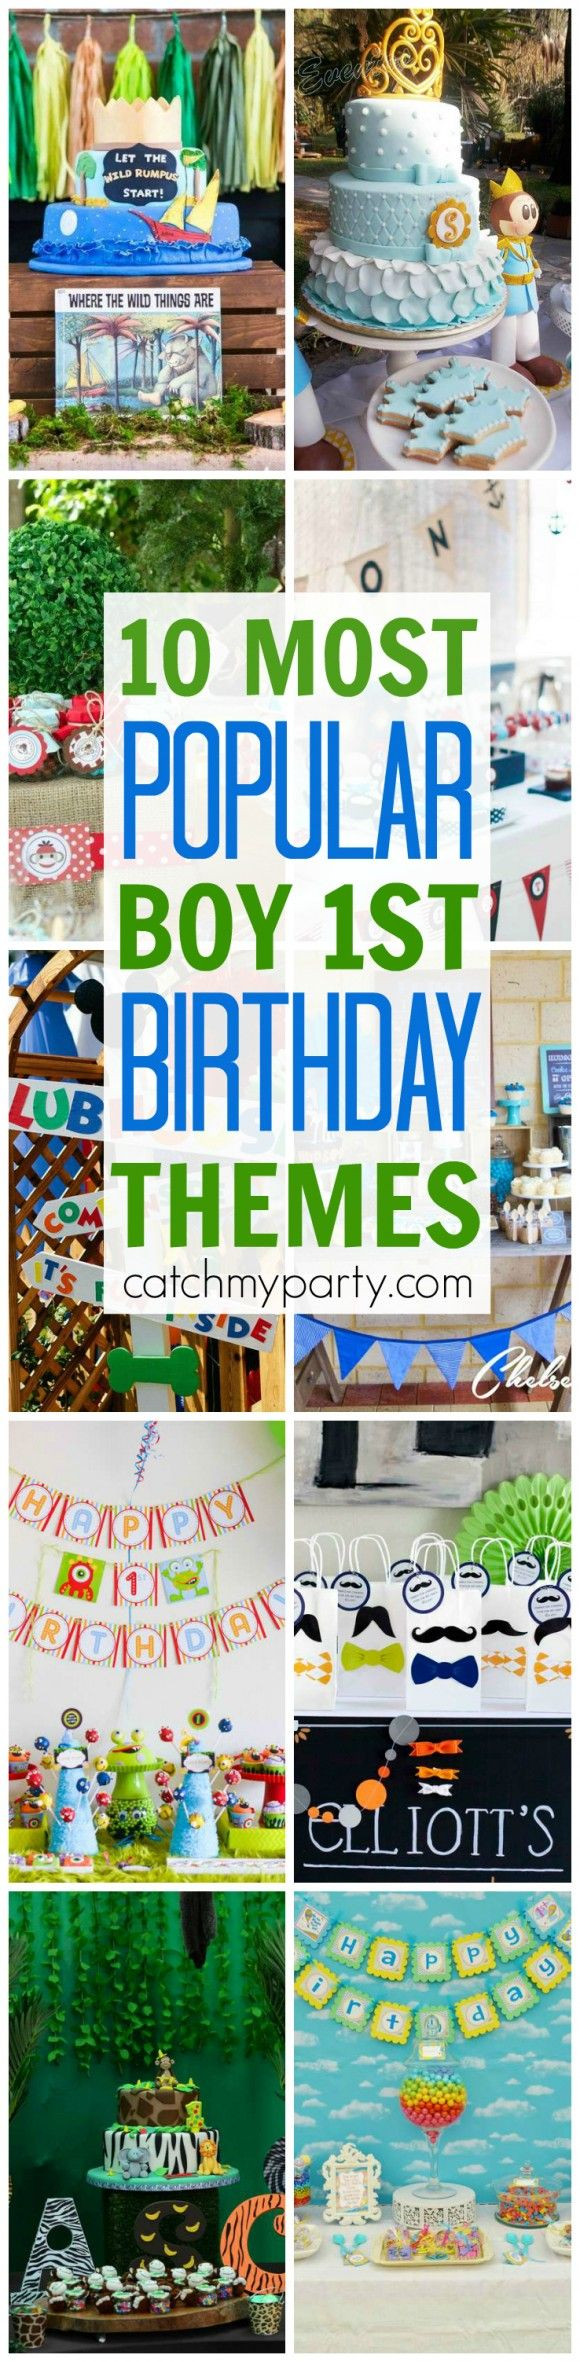 1st Boy Birthday Party Ideas
 10 Most Popular Boy 1st Birthday Party Themes